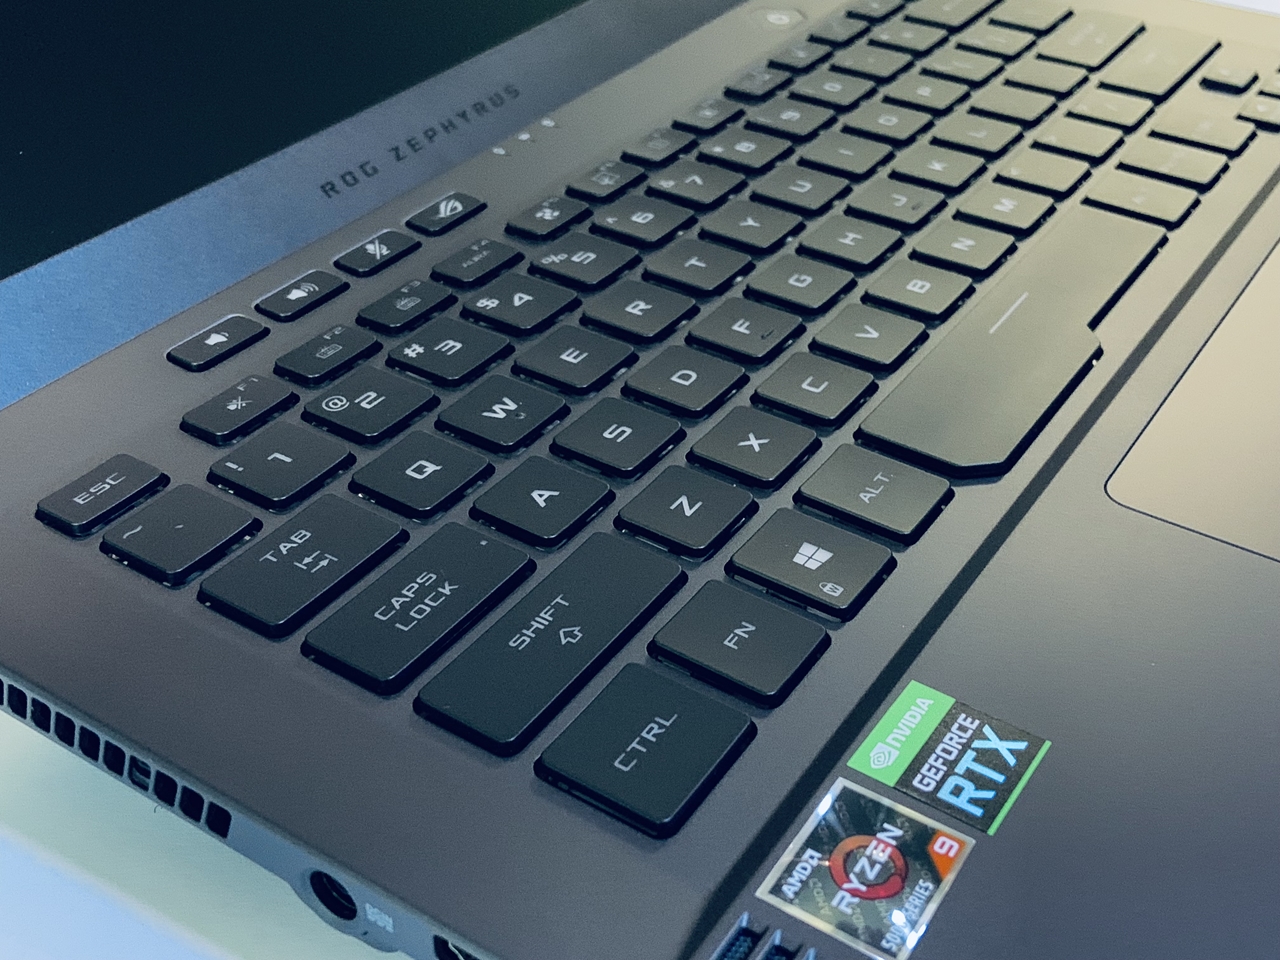 Asus ROG Zephyrus G14 Gaming Laptop Review - FunkyKit